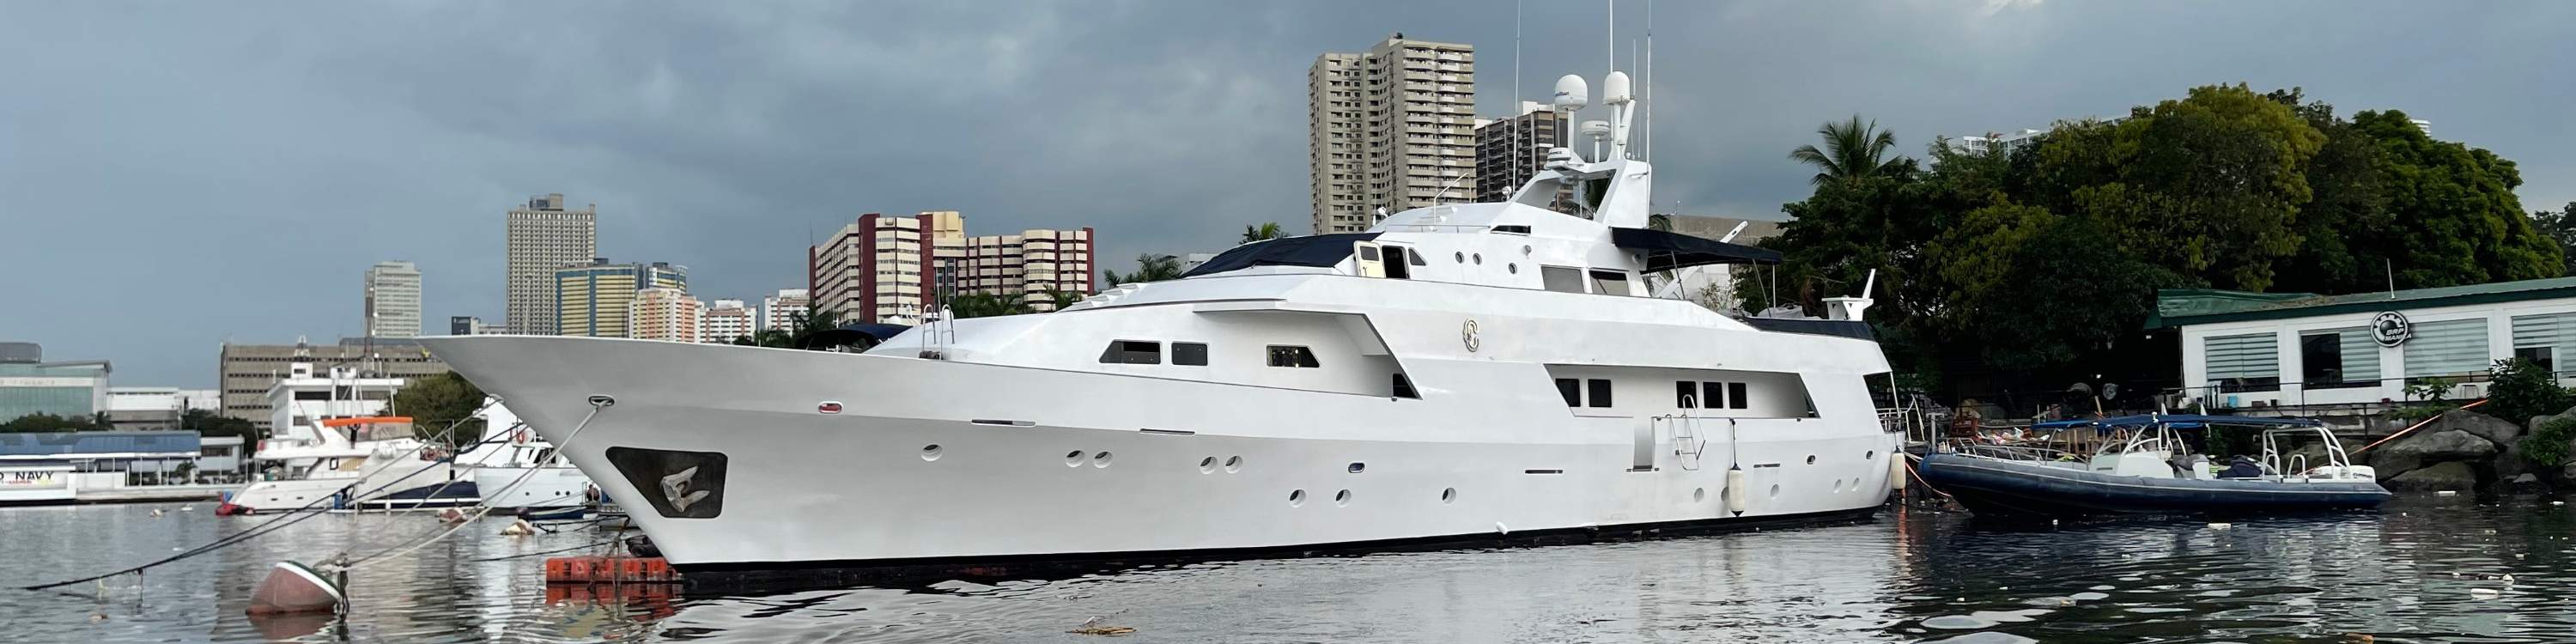 realship yacht manila